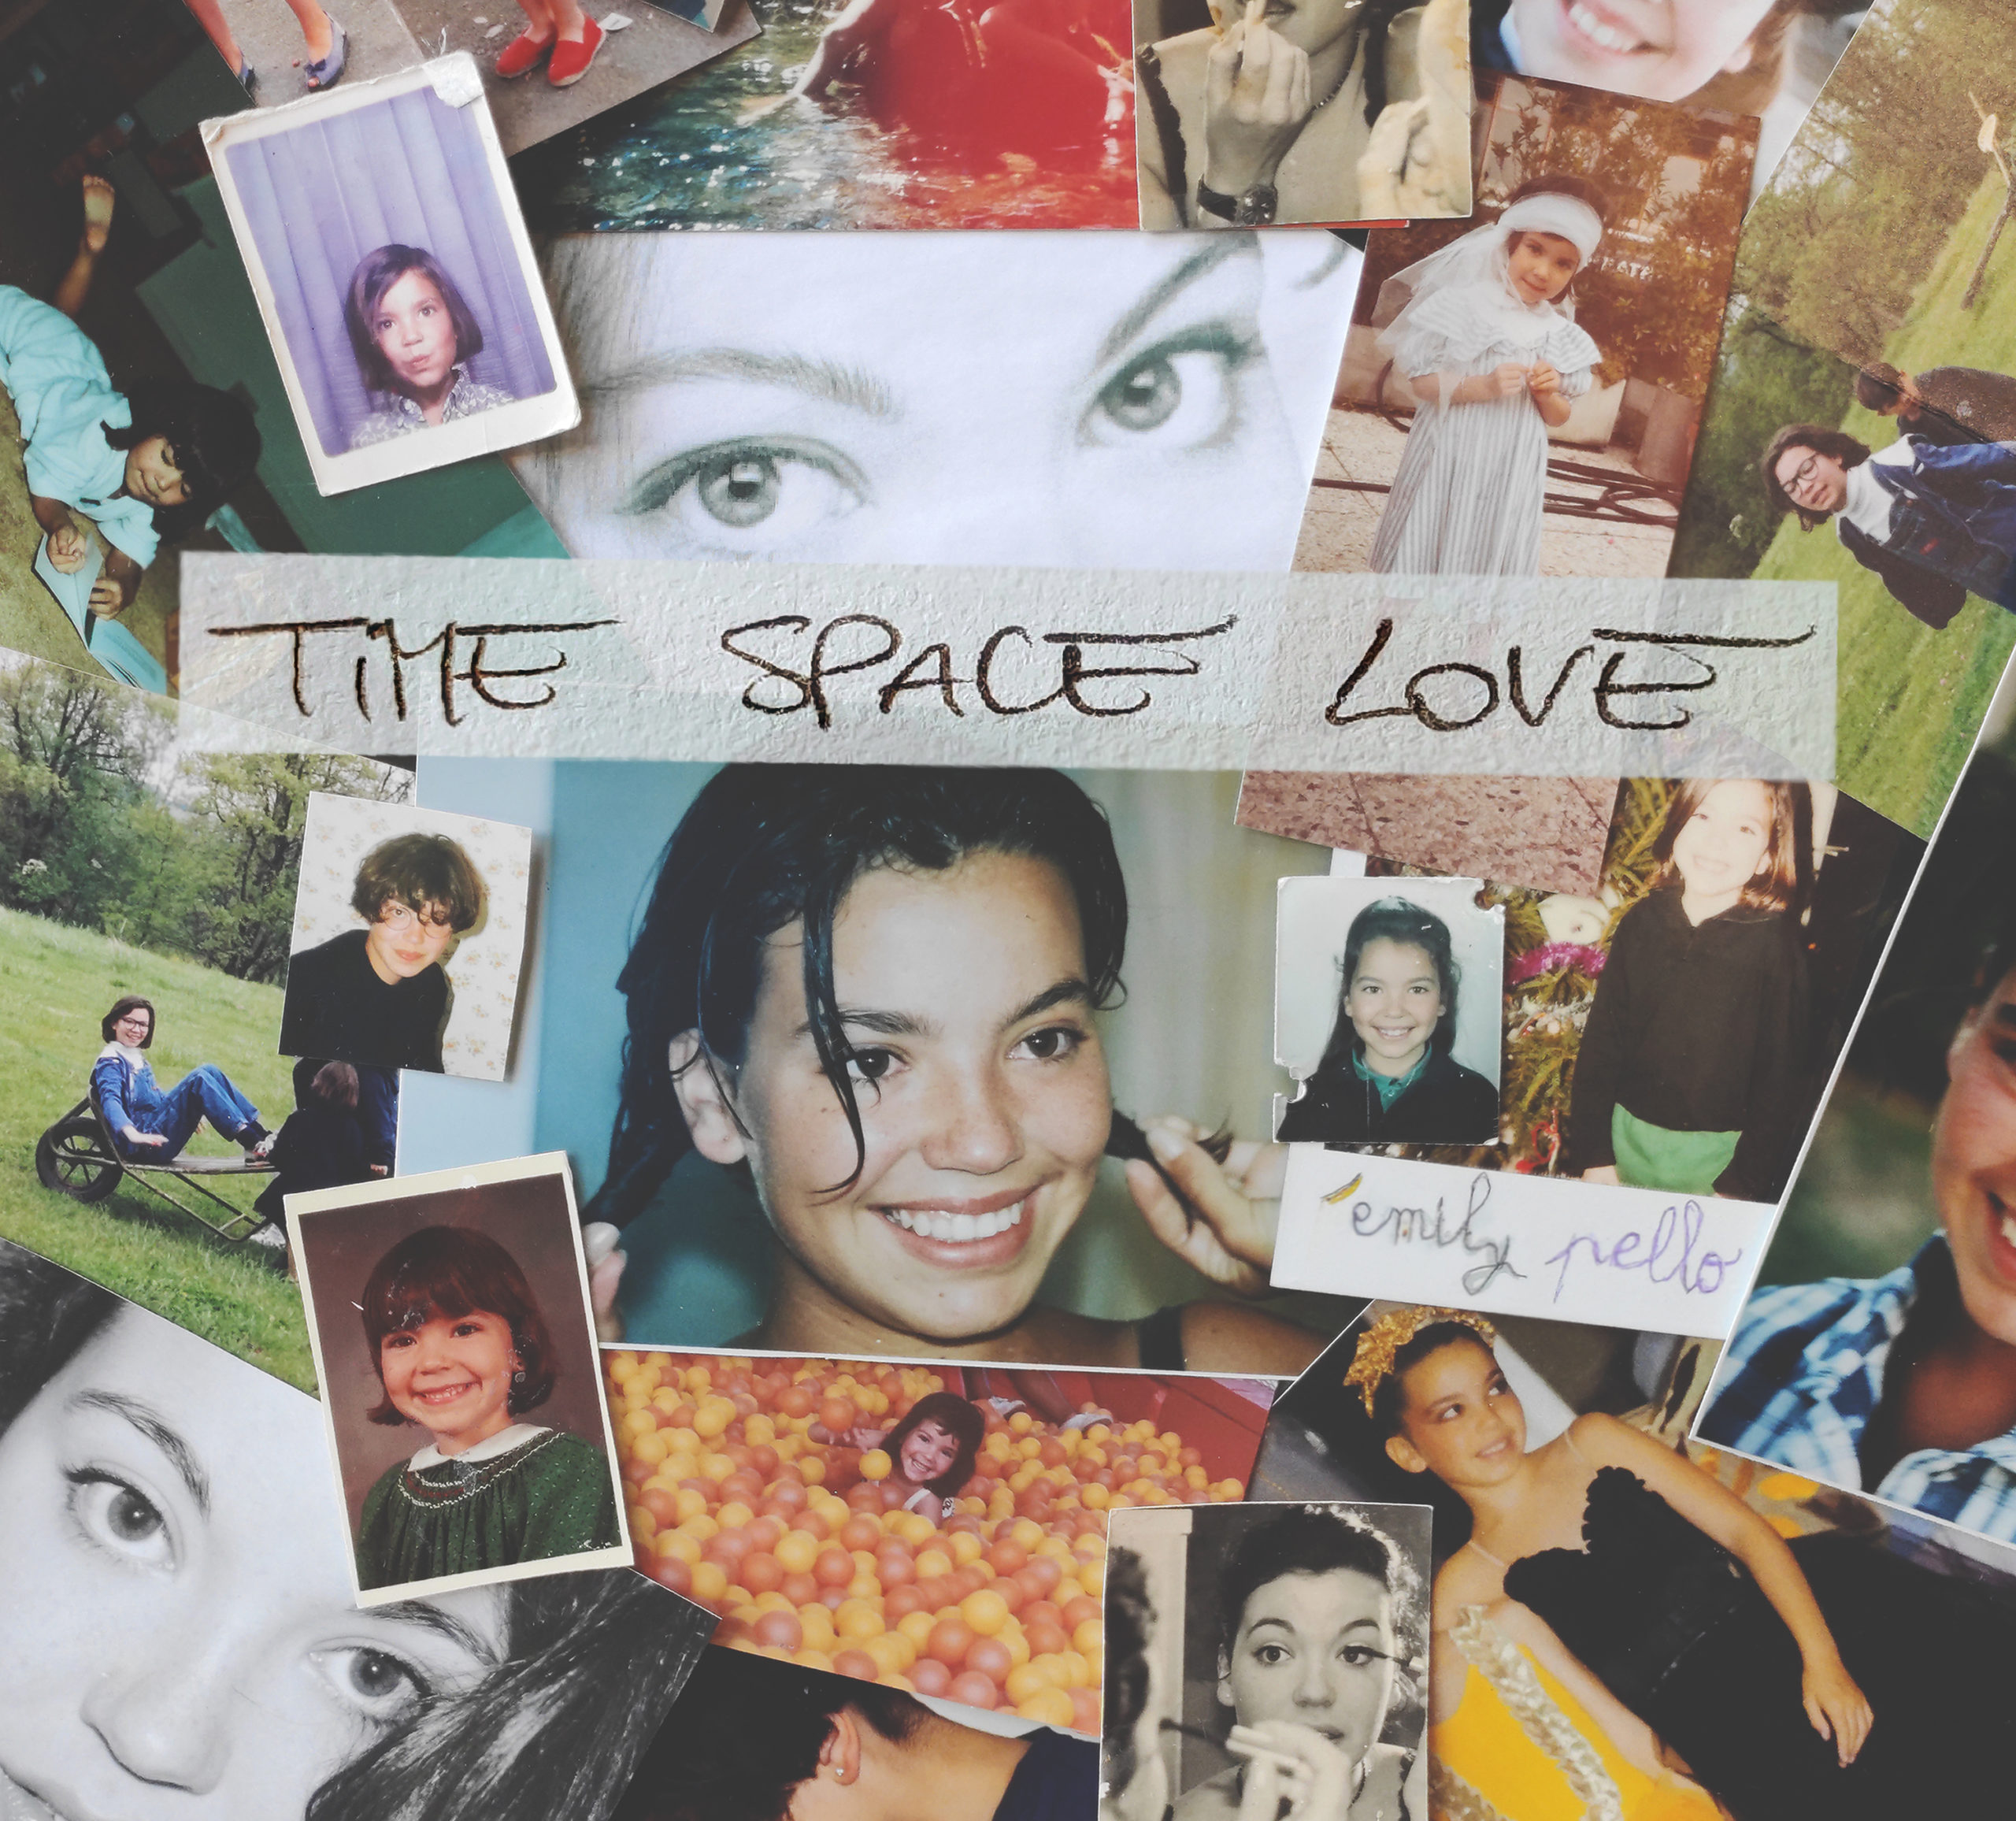 Emily Pello - "Time Space Love"